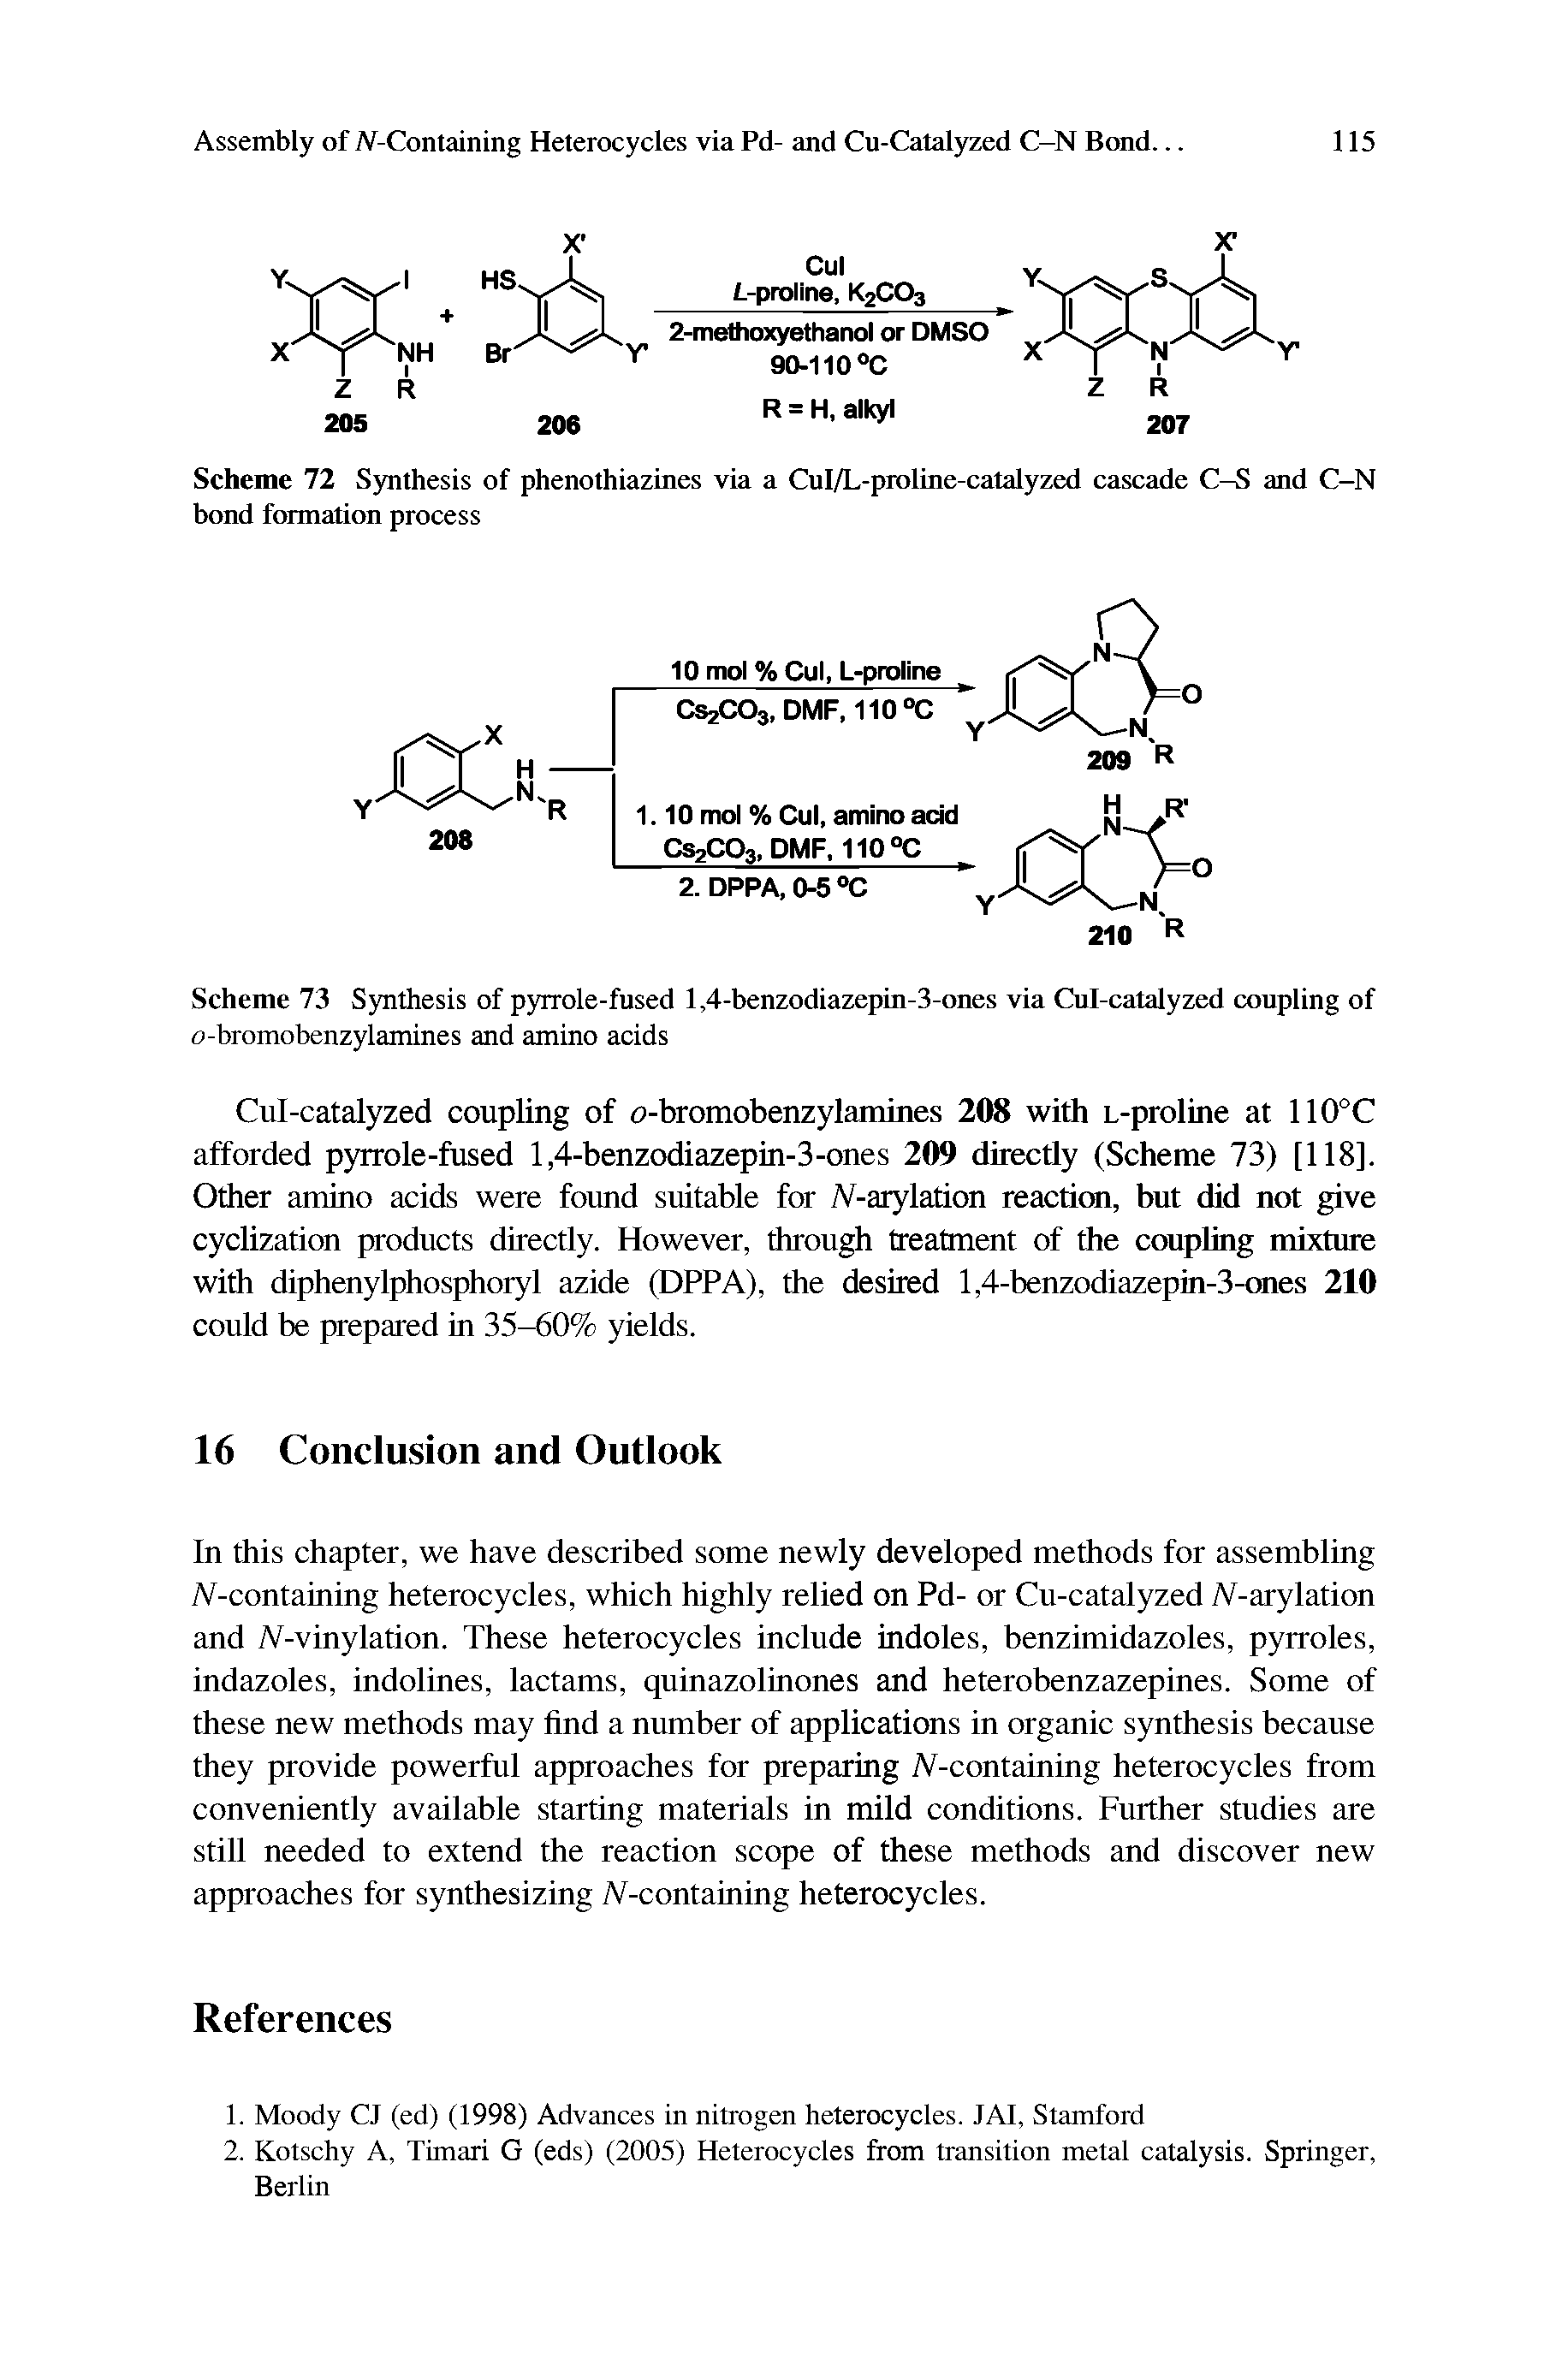 Scheme 72 Synthesis of phenothiazines via a Cul/L-proline-catalyzed cascade C-S and C-N bond framation process...